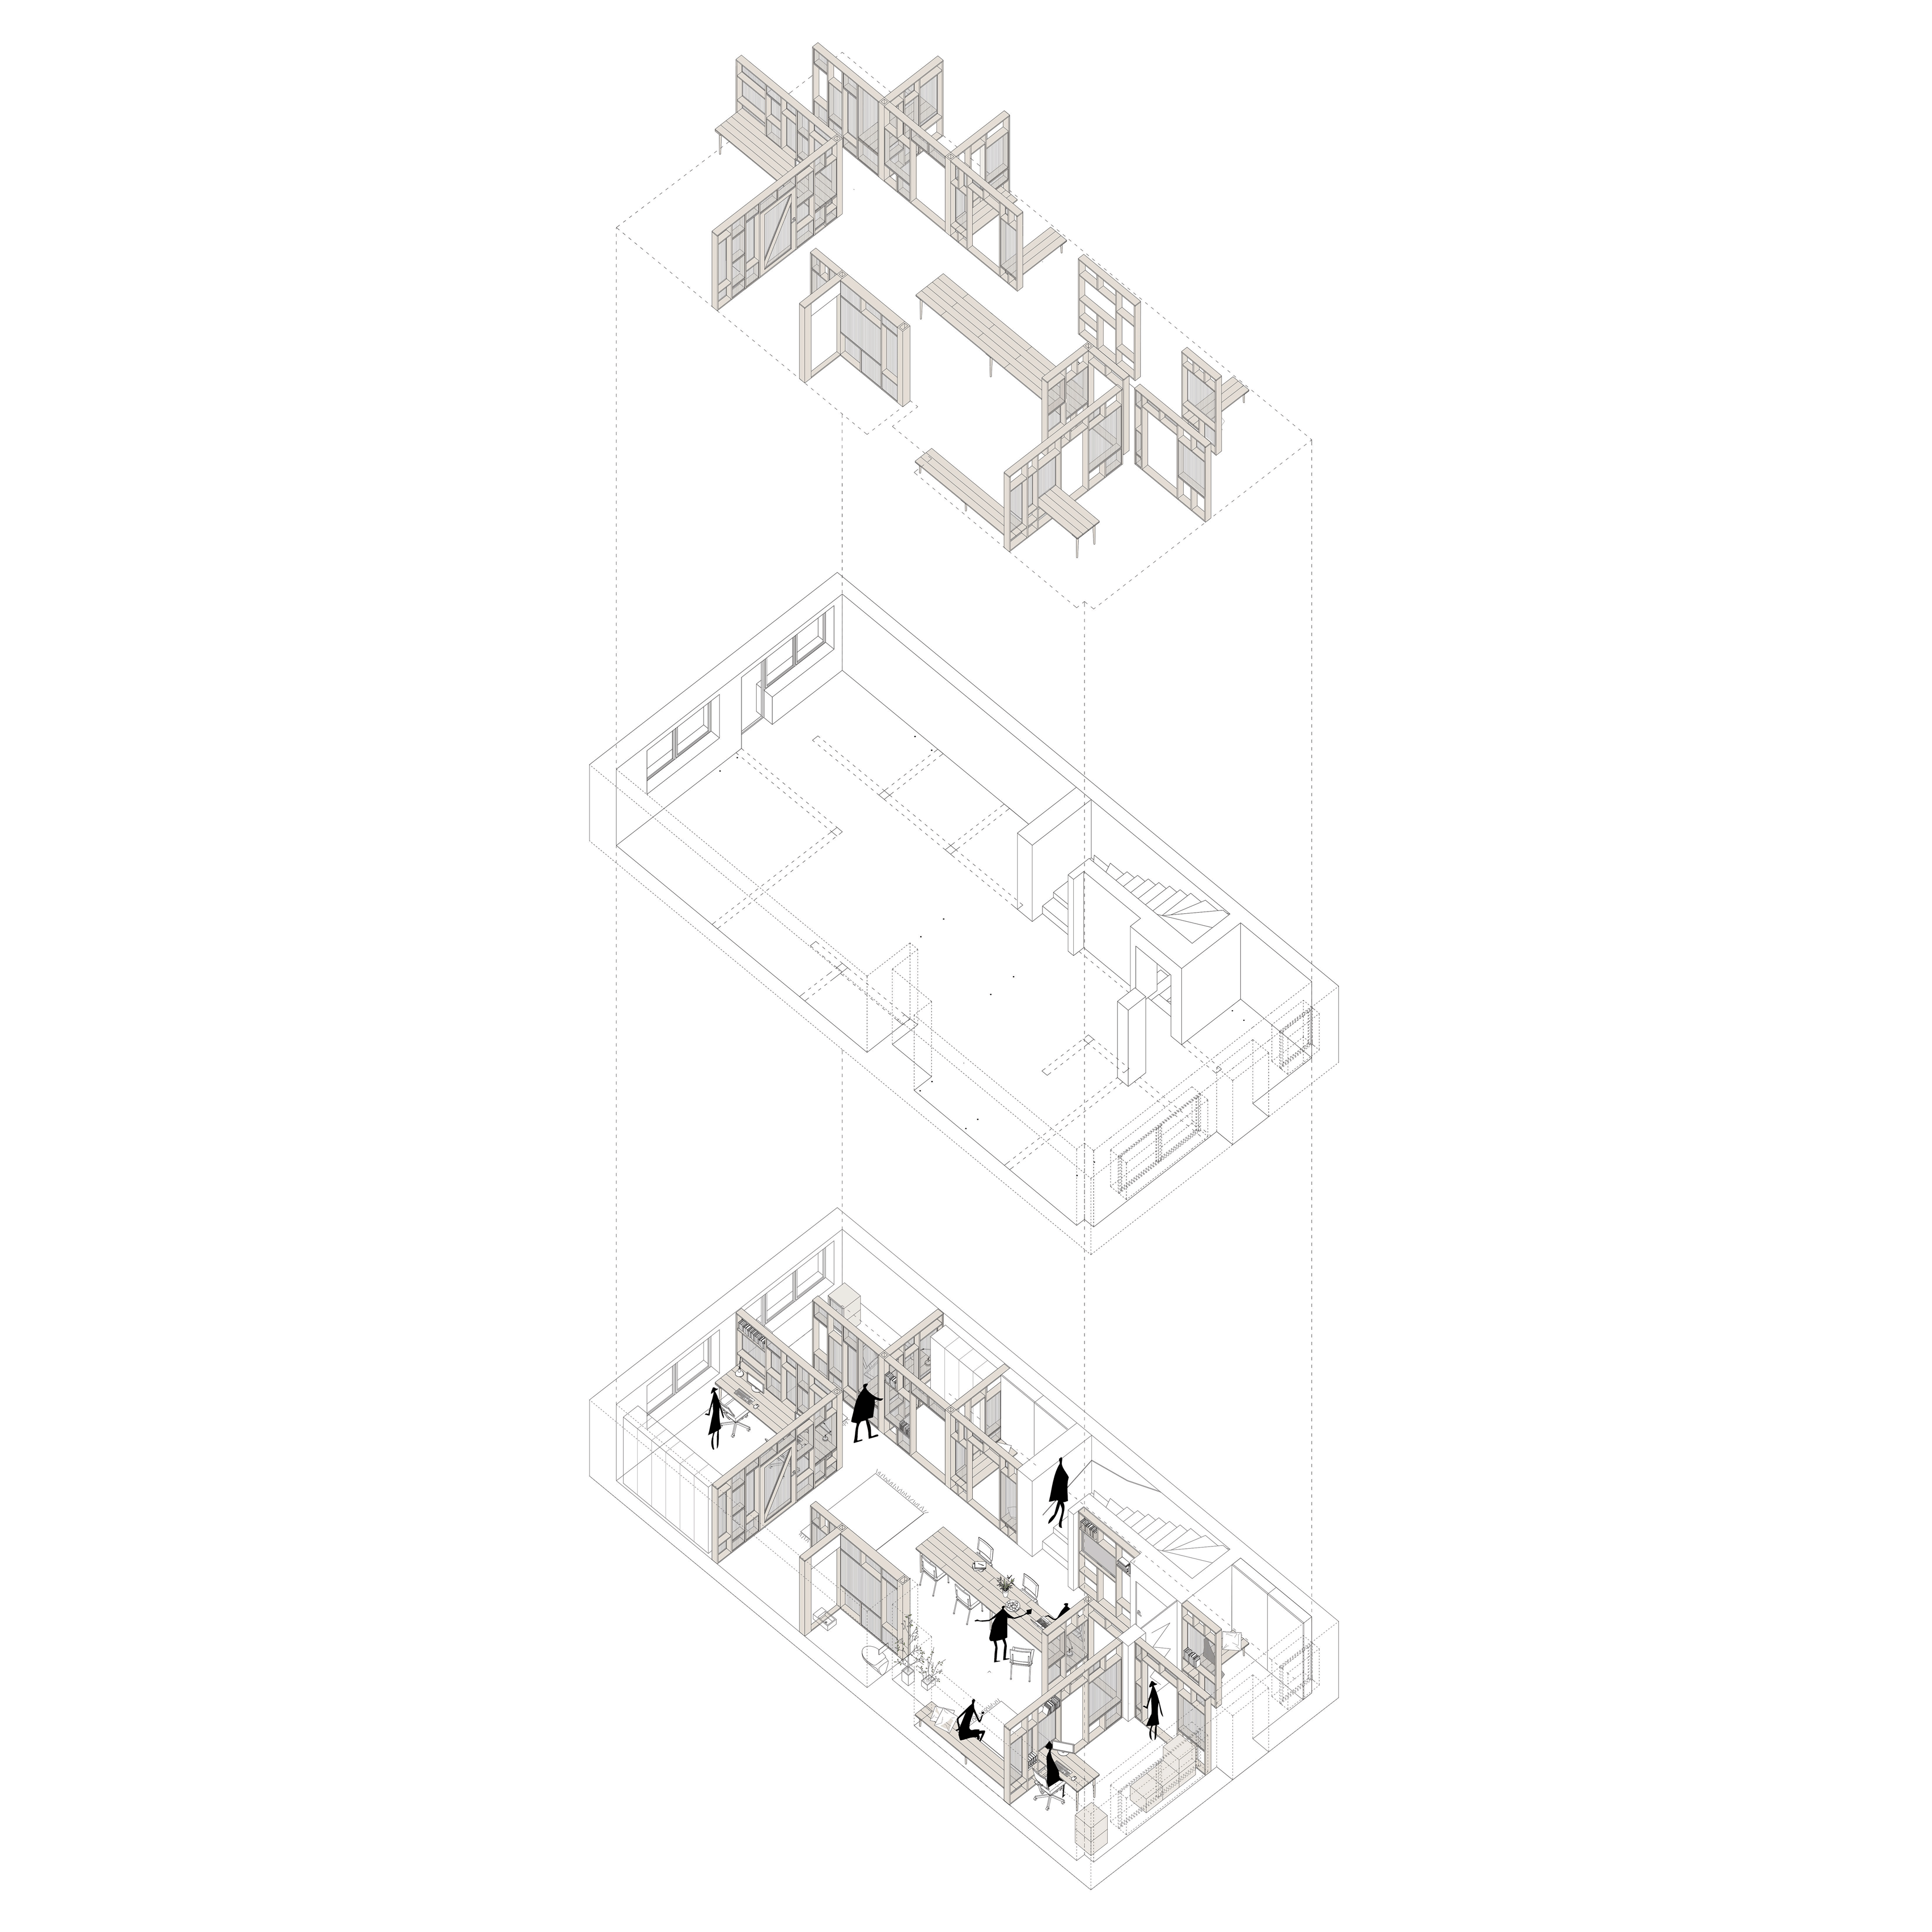 ztudio-mfrmgr-warsaw-poland-interior-workspace-office-economical_dezeen_exploded-diagram_1